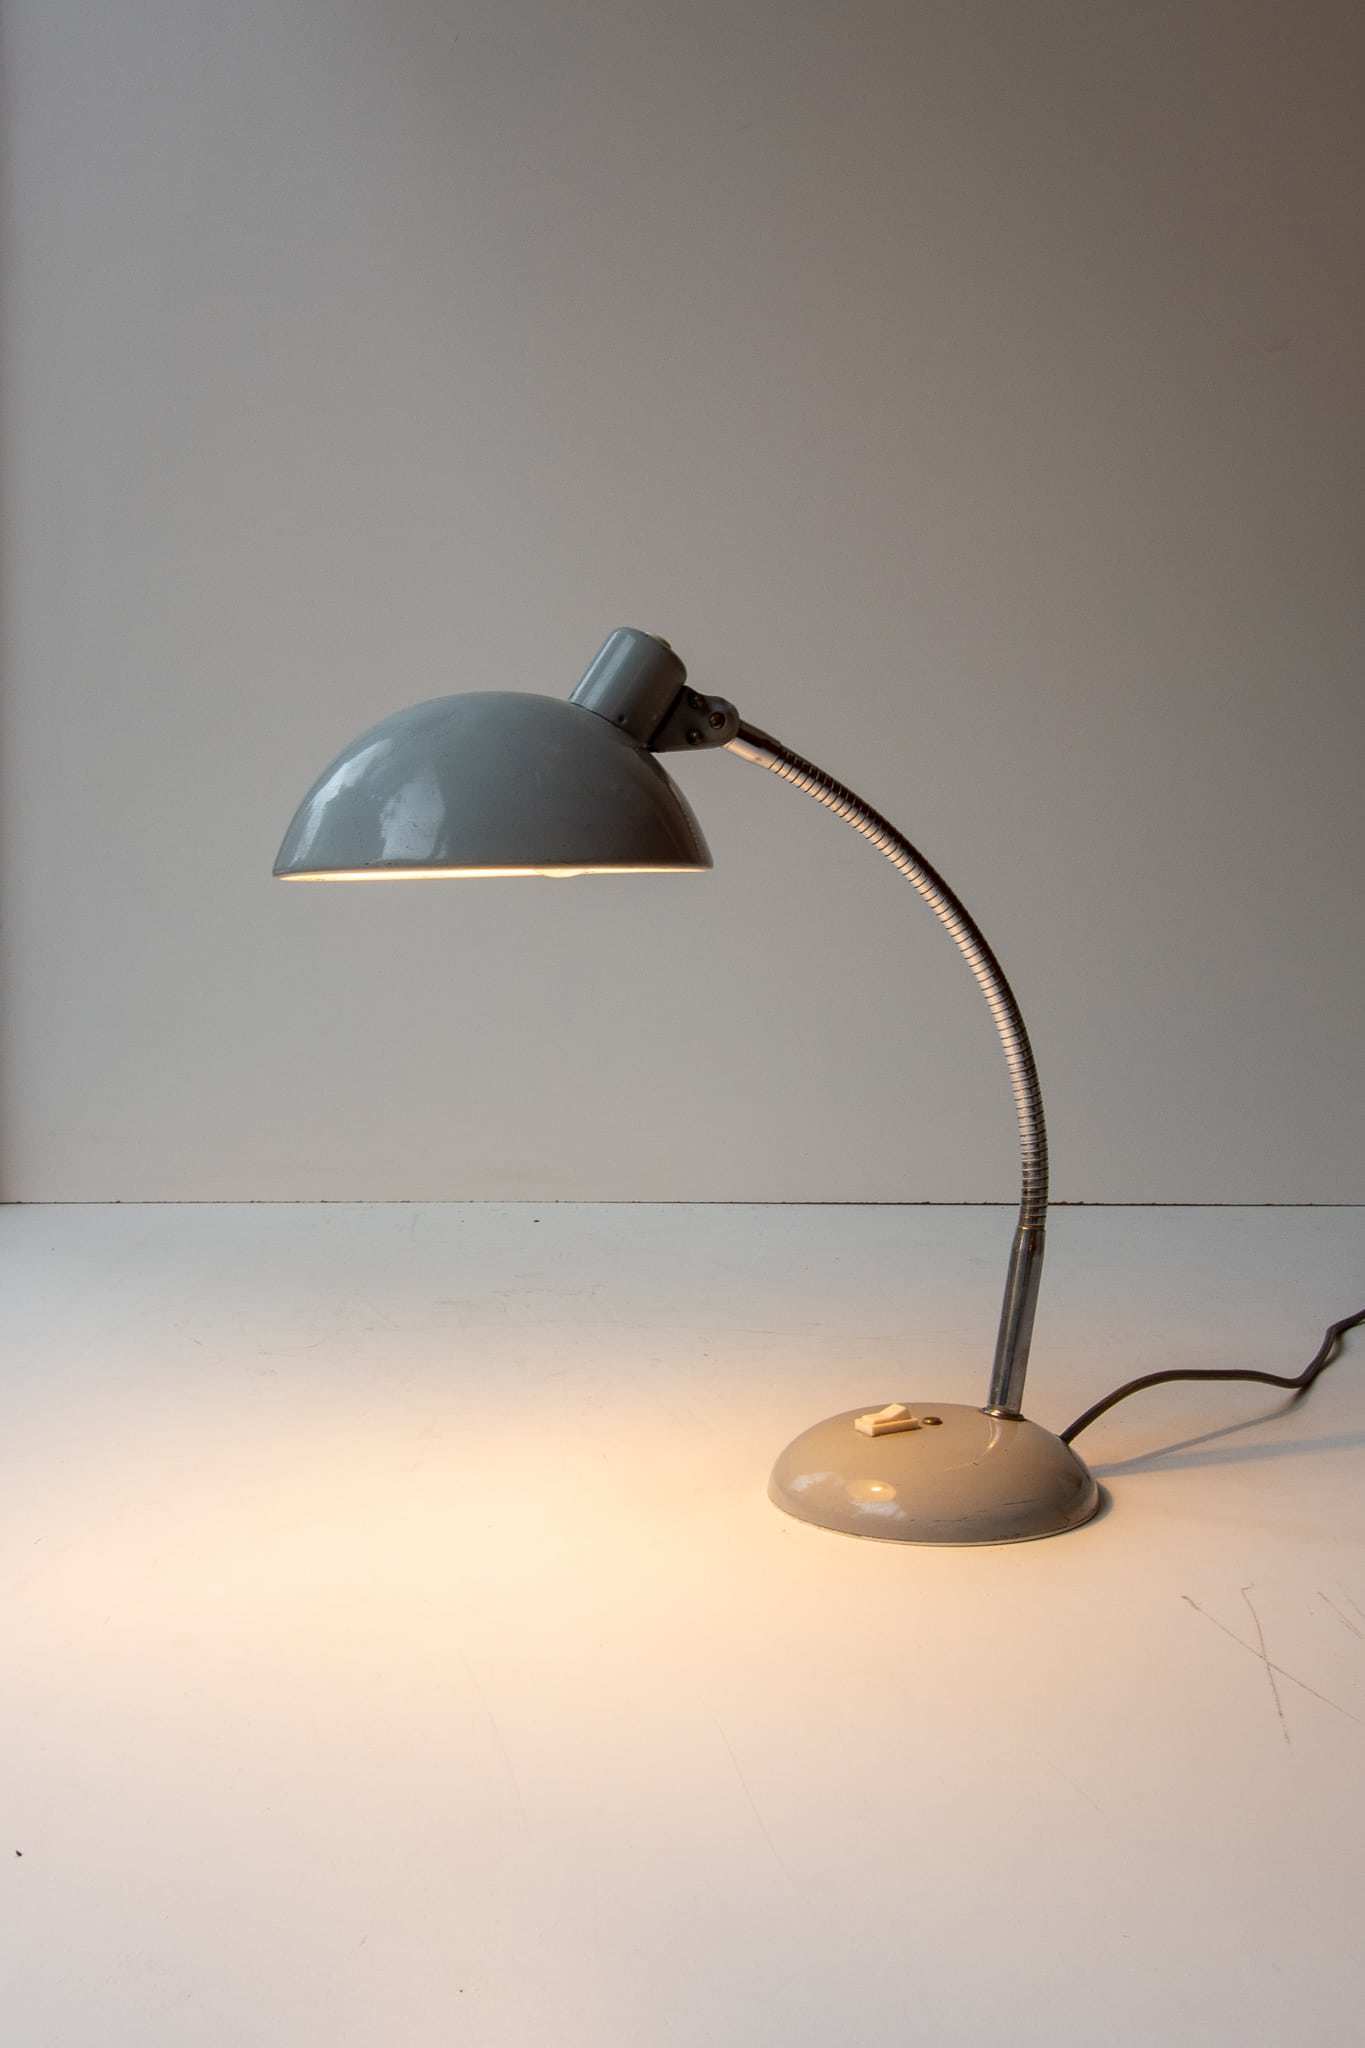 French desk lamp